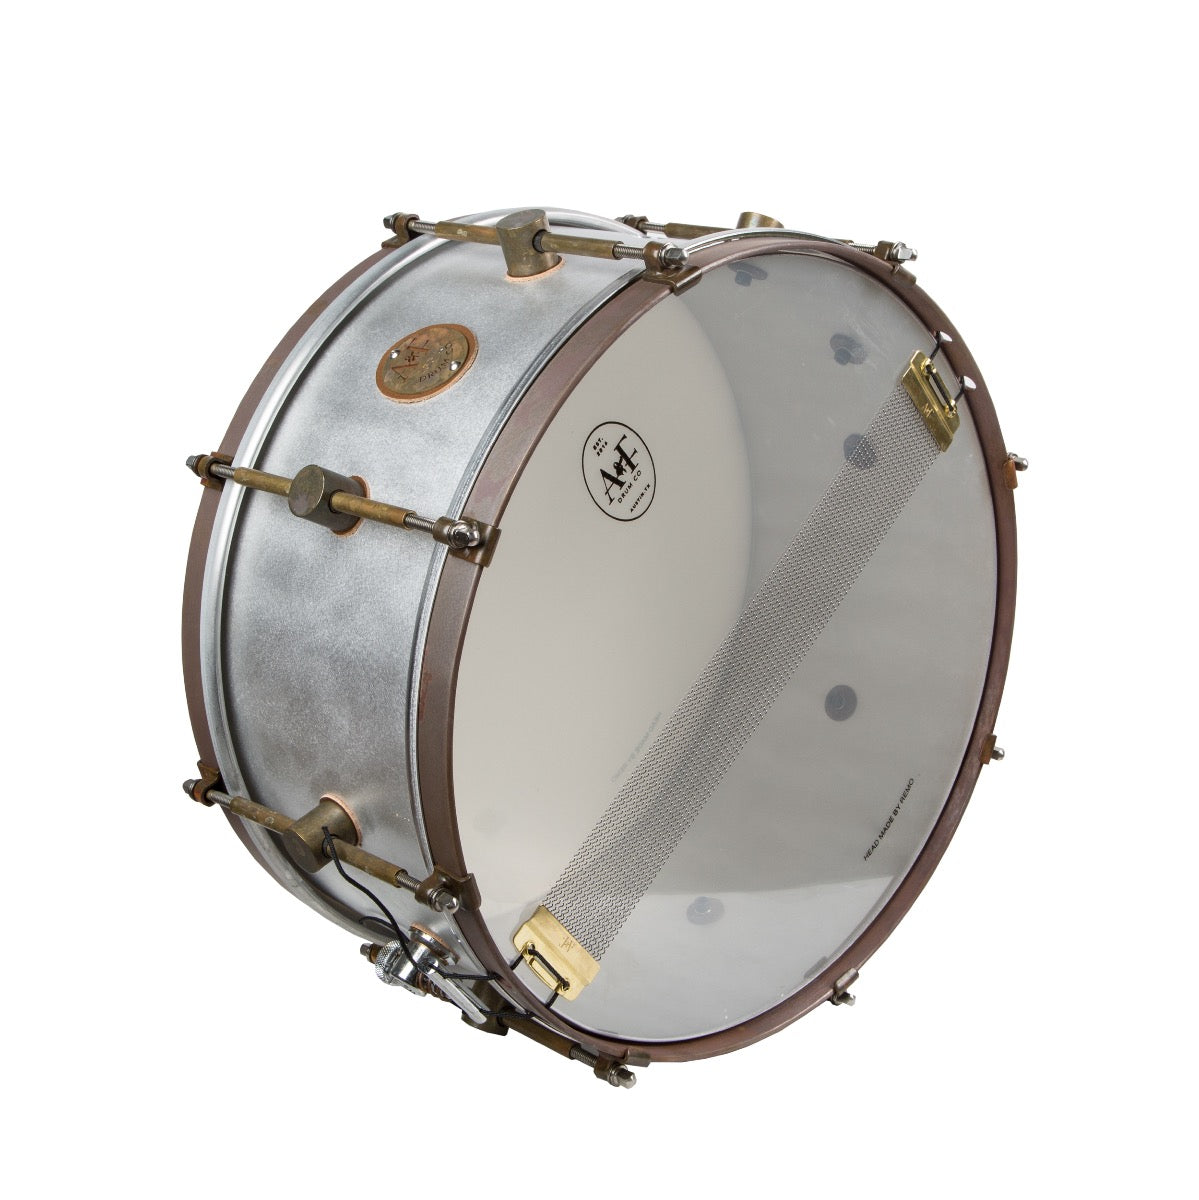 A&F Drum Company 6.5x14  8 Lug Raw Aluminum Snare Drum